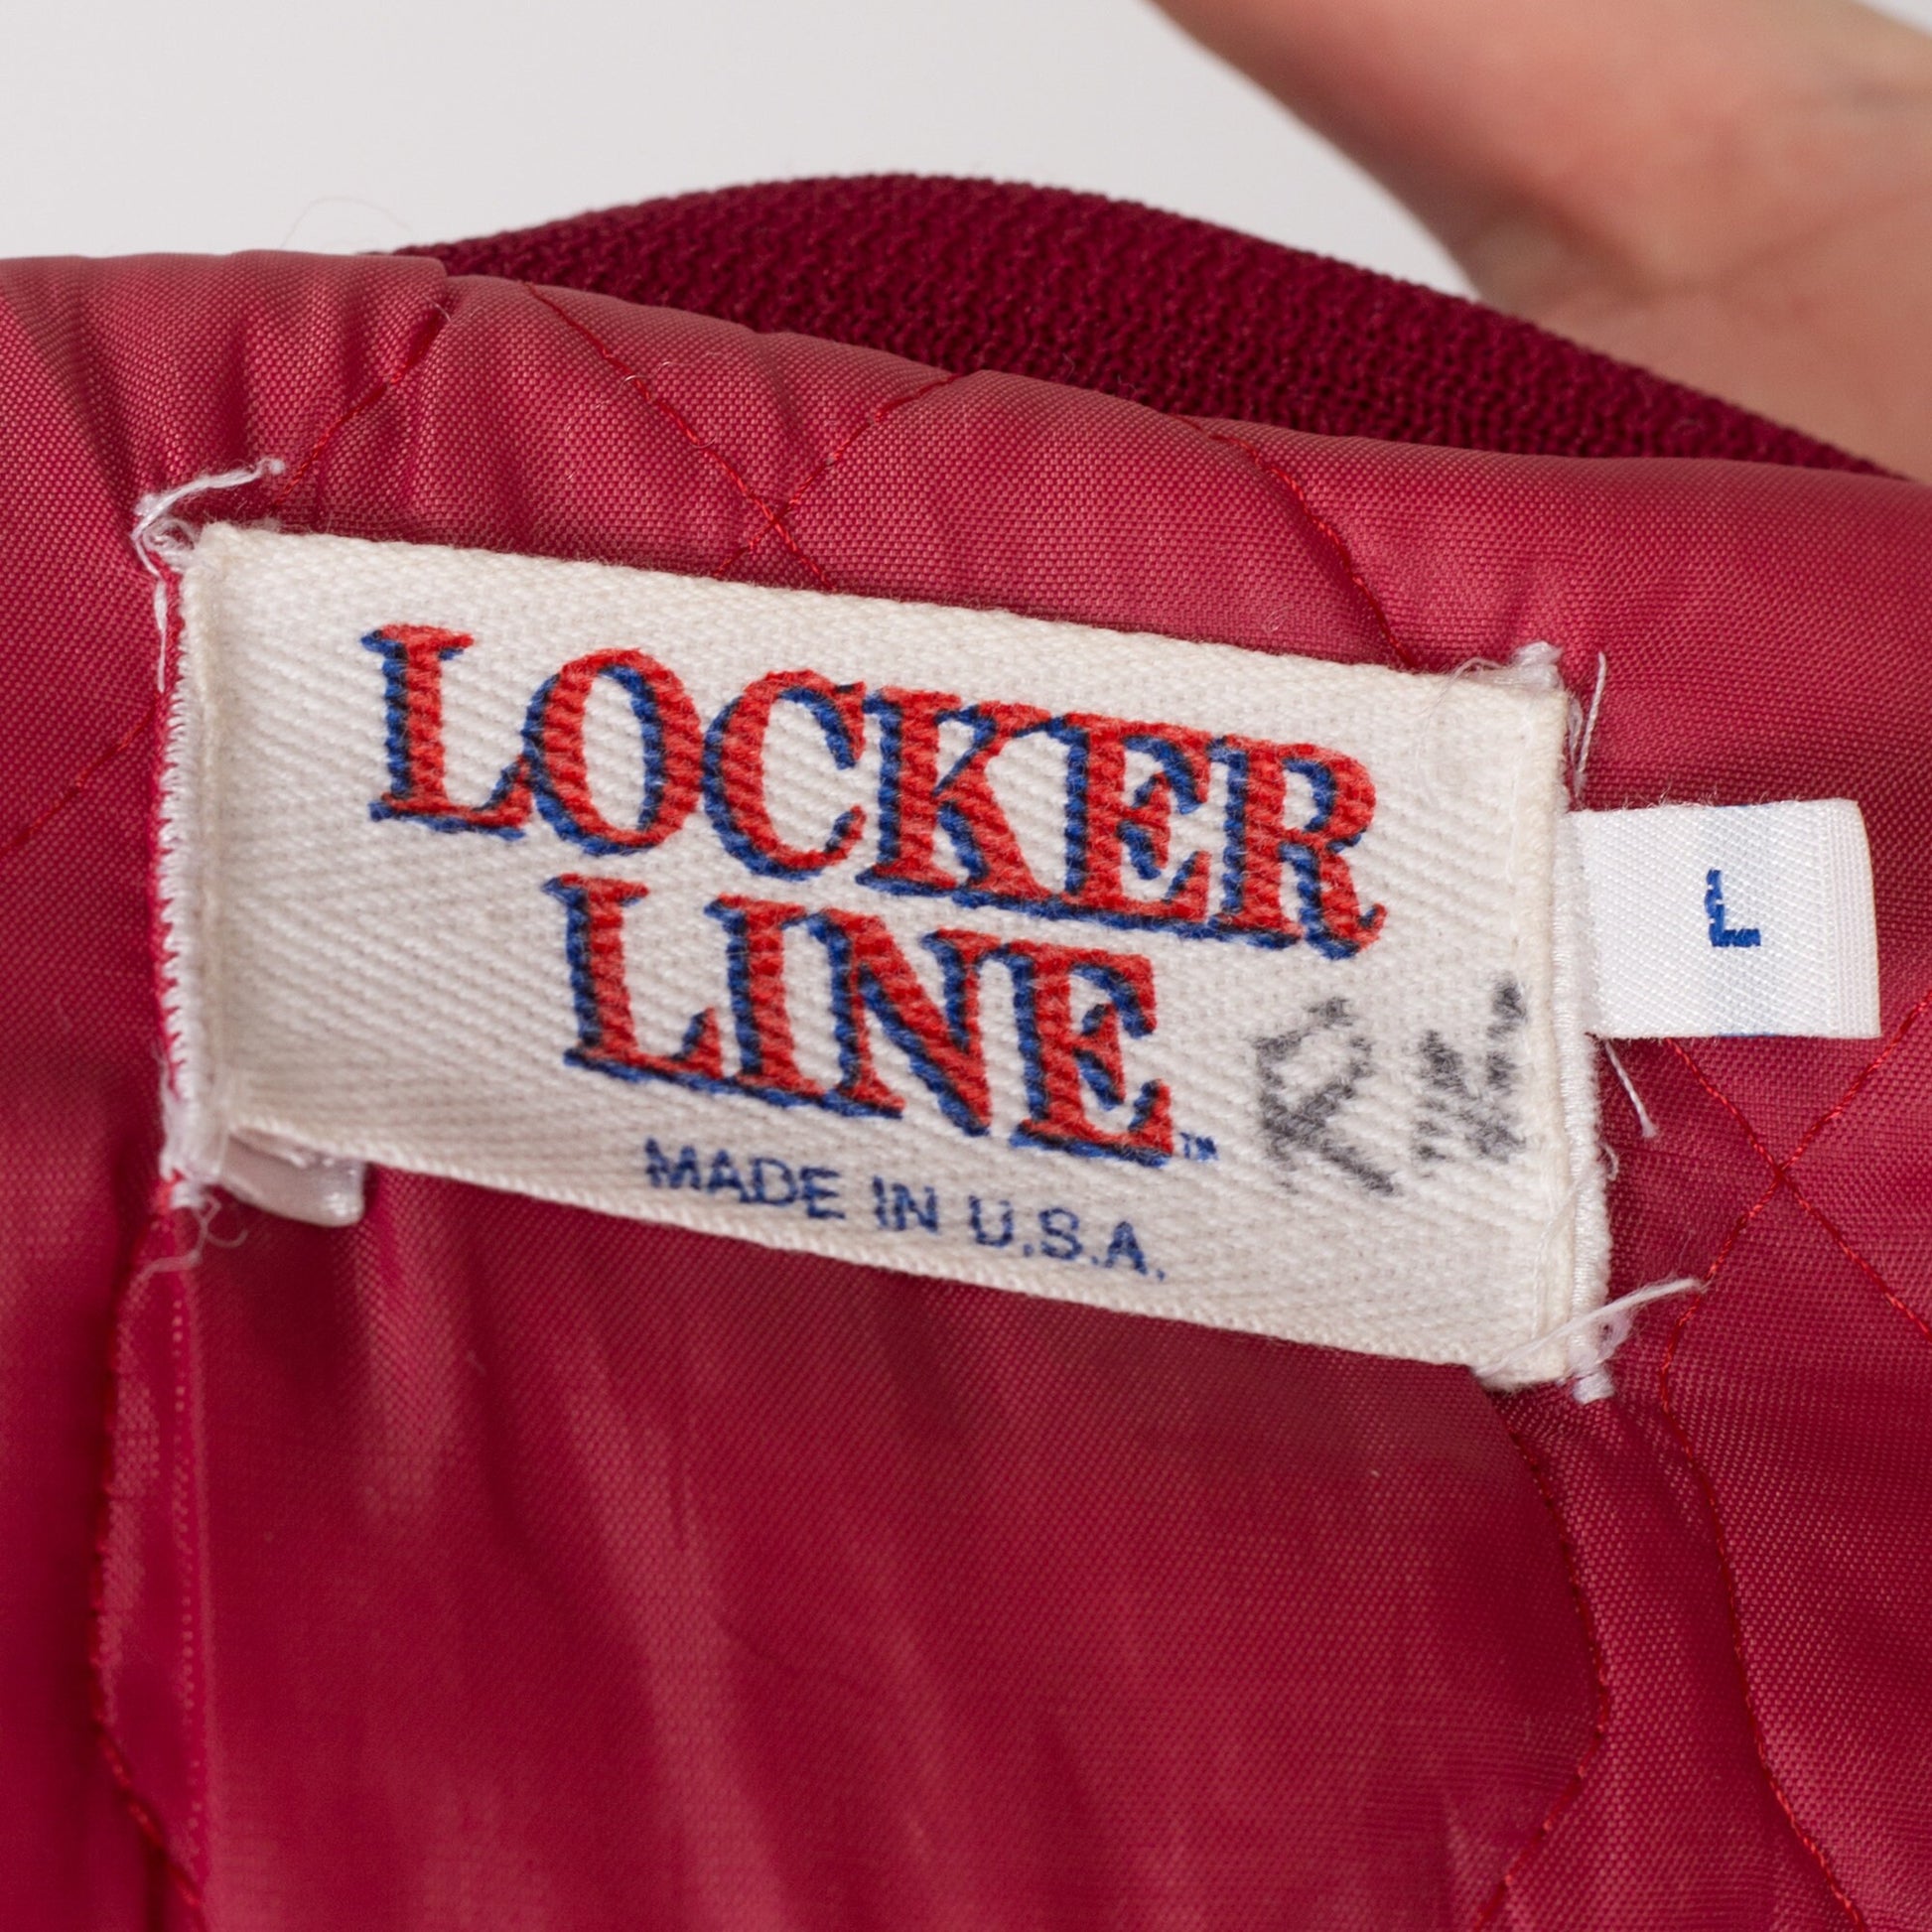 Large 80s Arizona Cardinals NFL Satin Bomber Jacket | Vintage Football Cardinal Red Snap Button Athletic Varsity Windbreaker